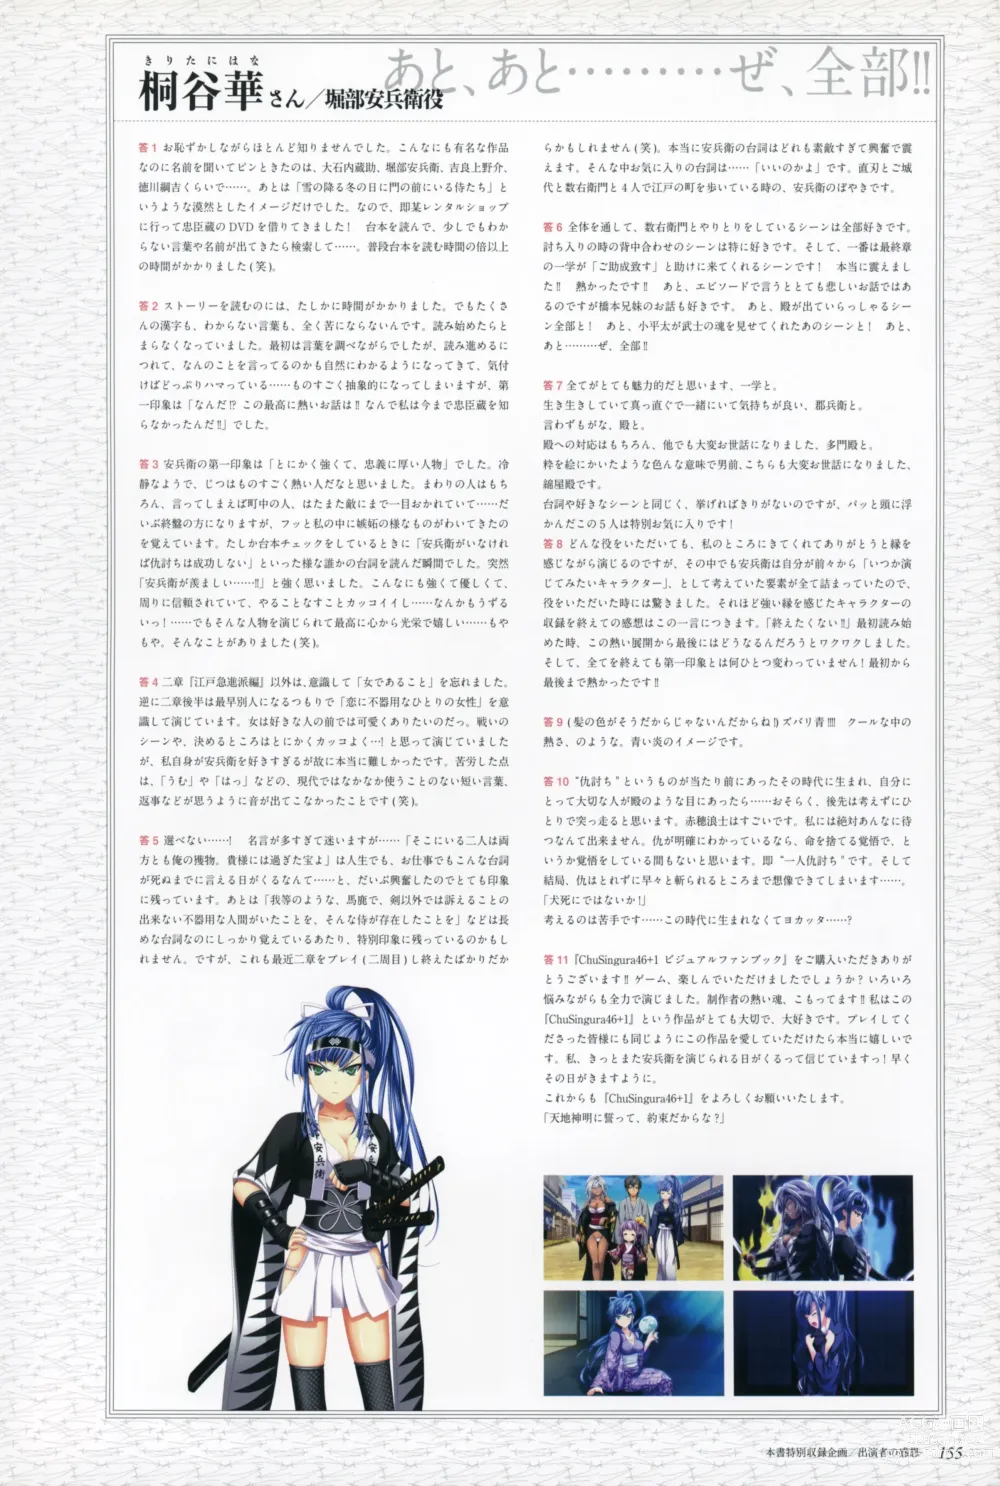 Page 157 of manga ChuSinGura 46+1 Official Visual Fan Book